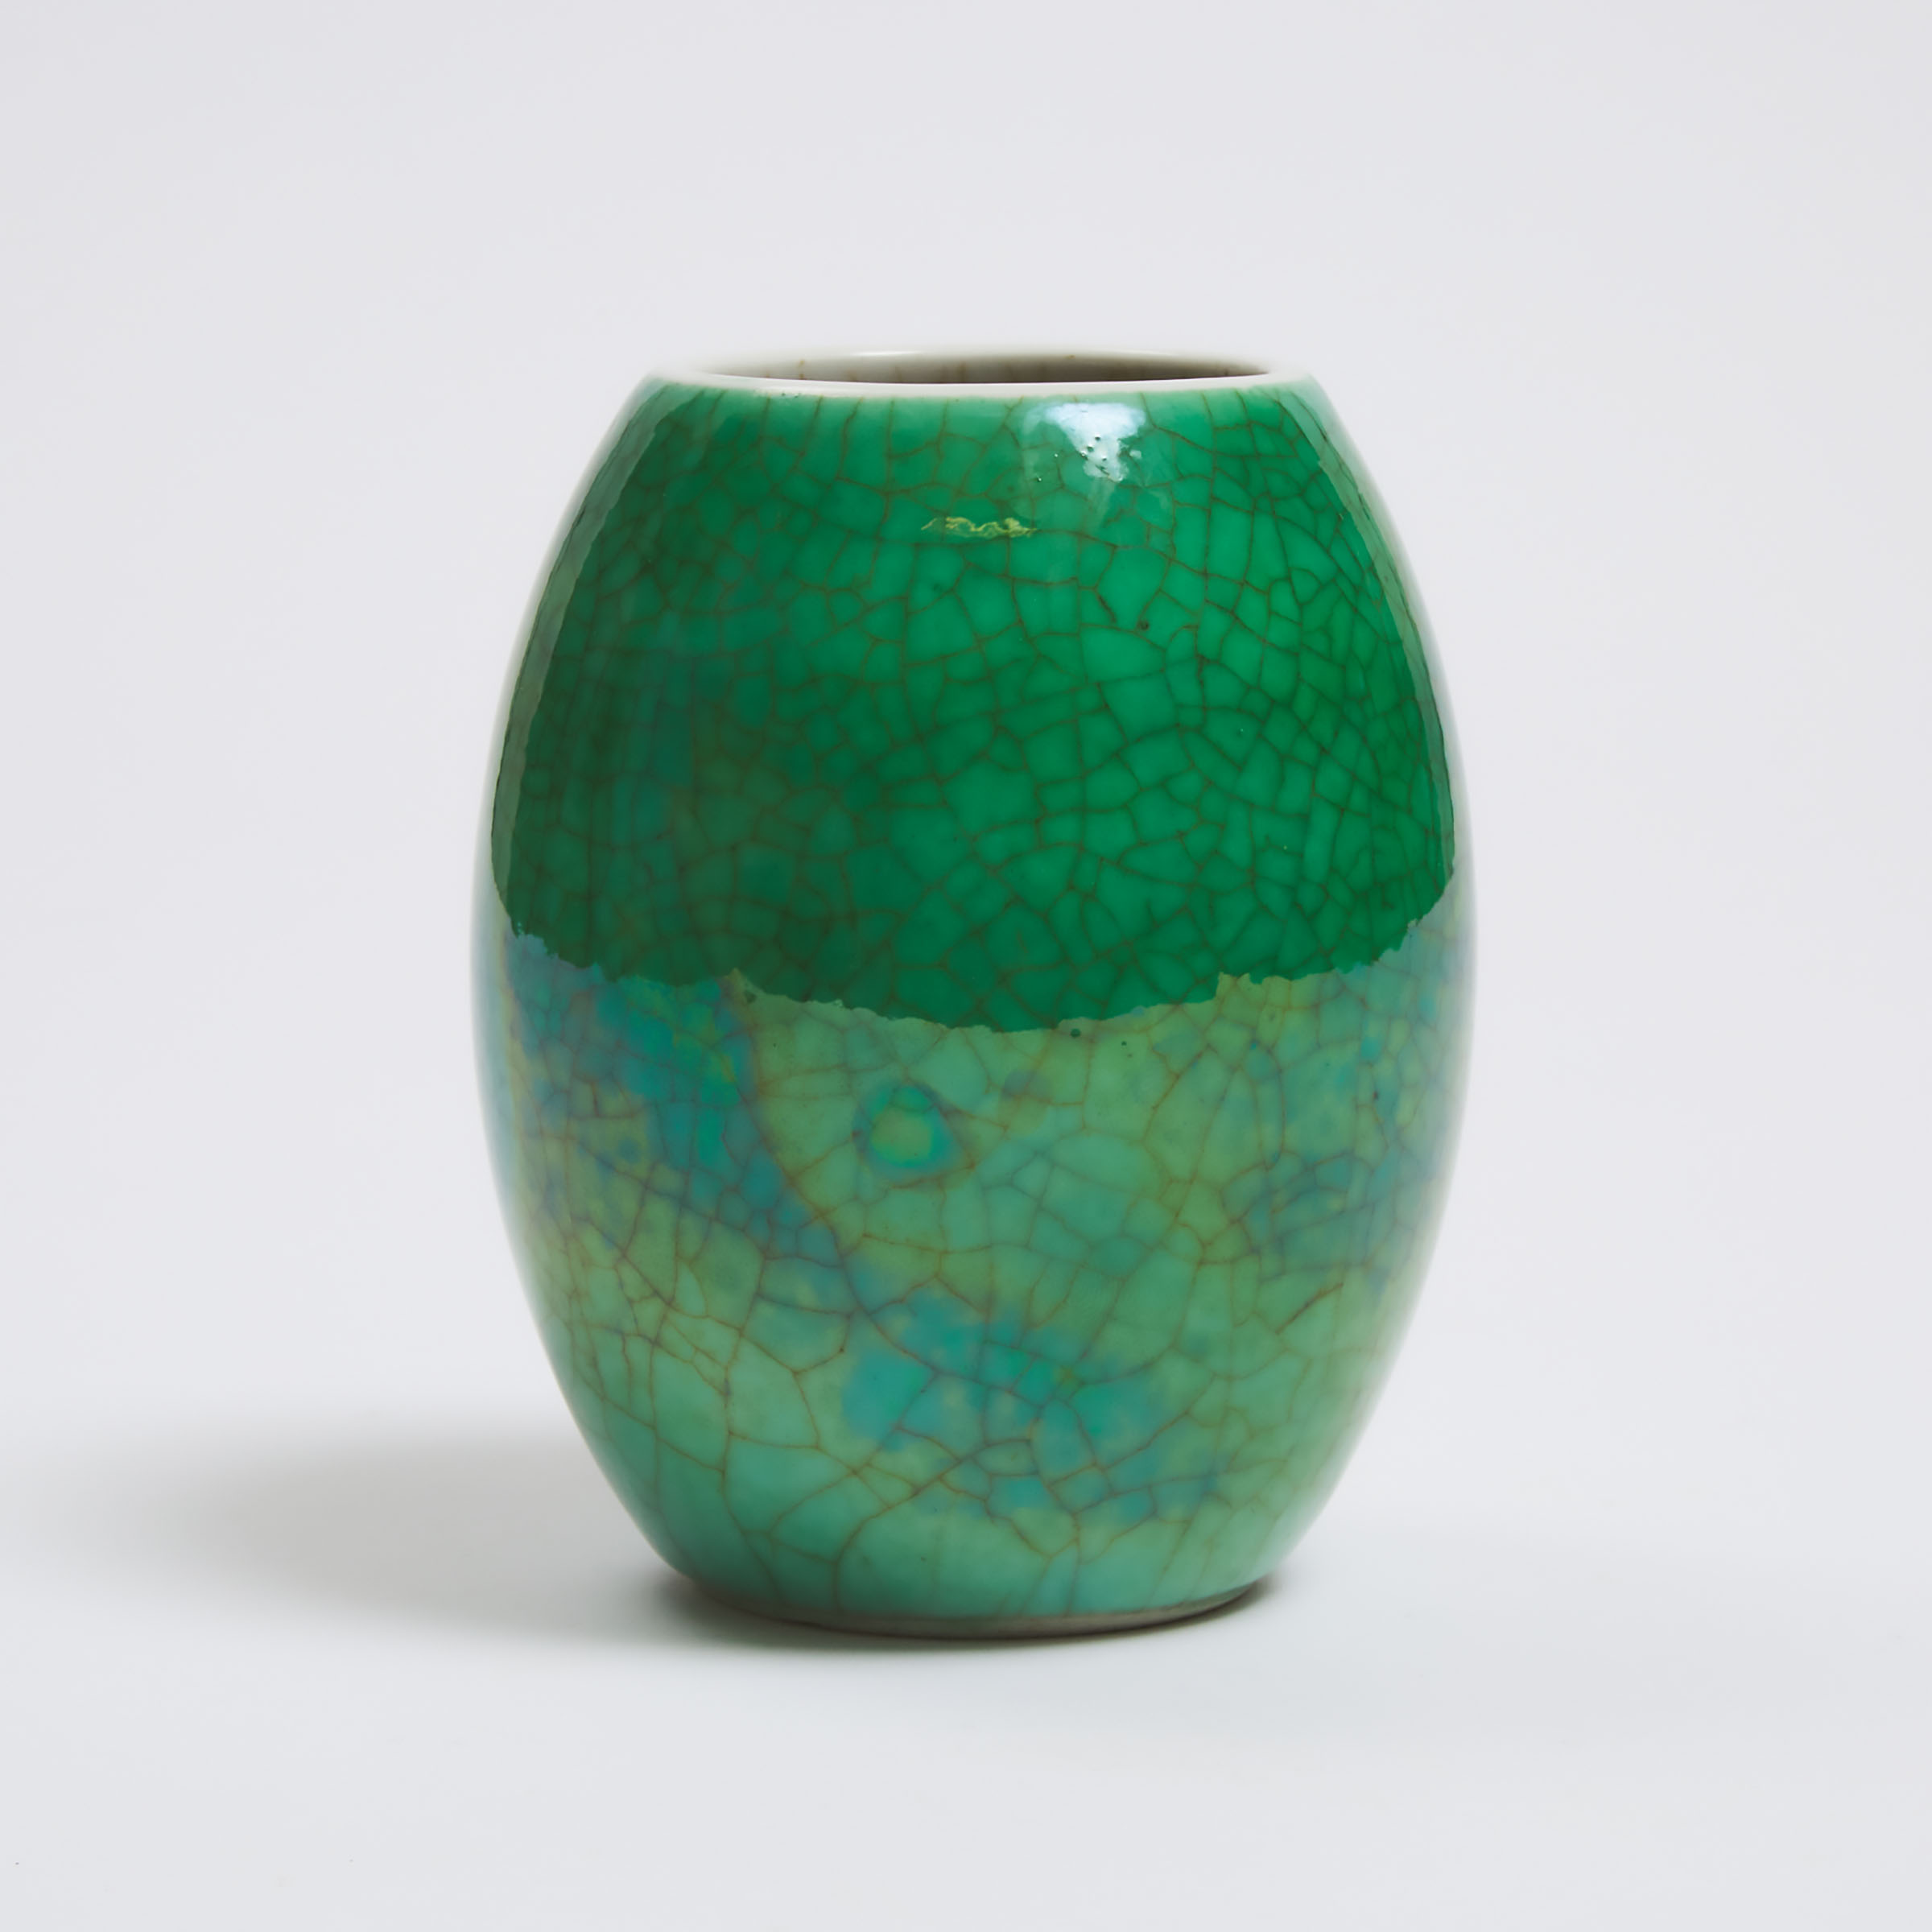 An Apple-Green Crackle-Glazed Vase, Qing Dynasty, 18th/19th Century